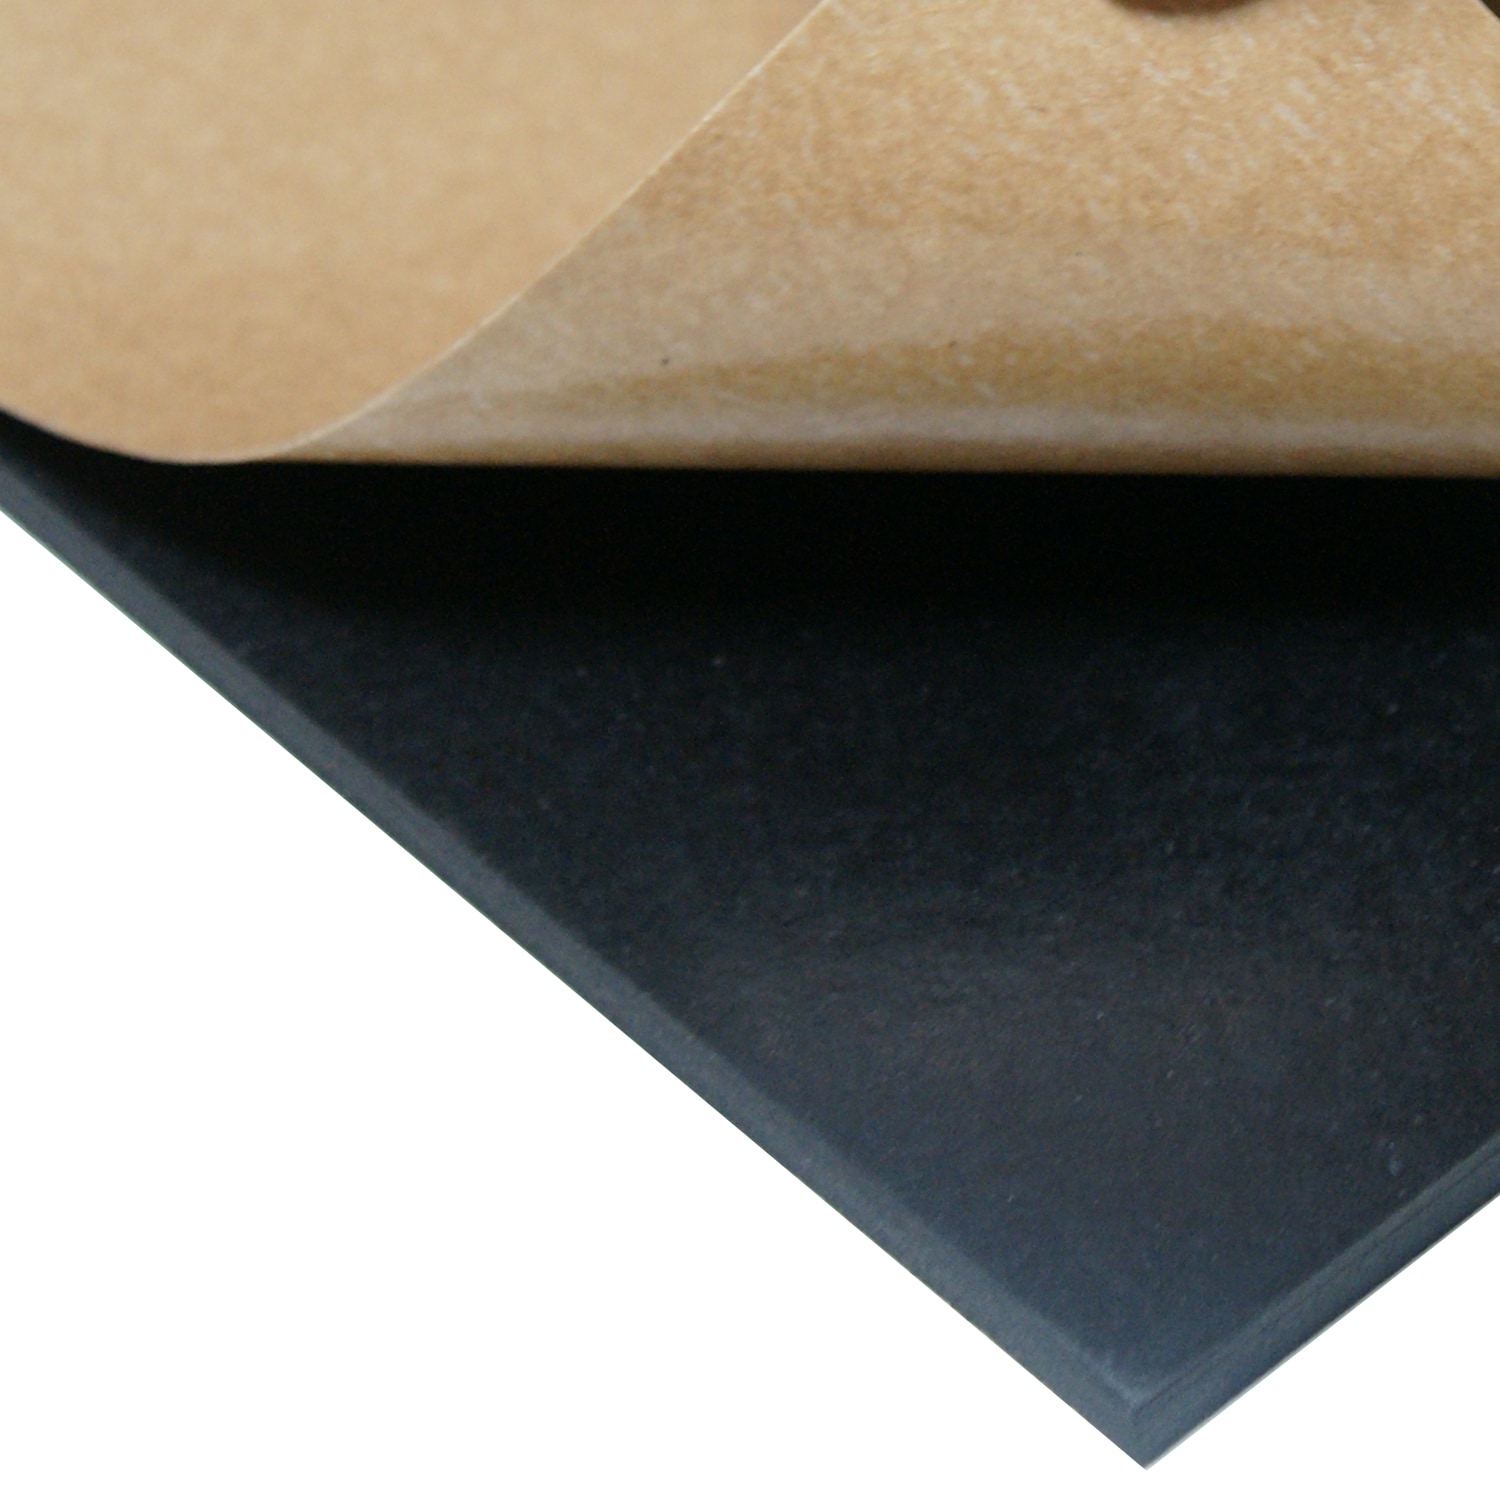 25x Adhesive Neoprene Rubber Sheet Sponge Foam Pad for Craft, 1/16 Thick,  6x6, PACK - Kroger